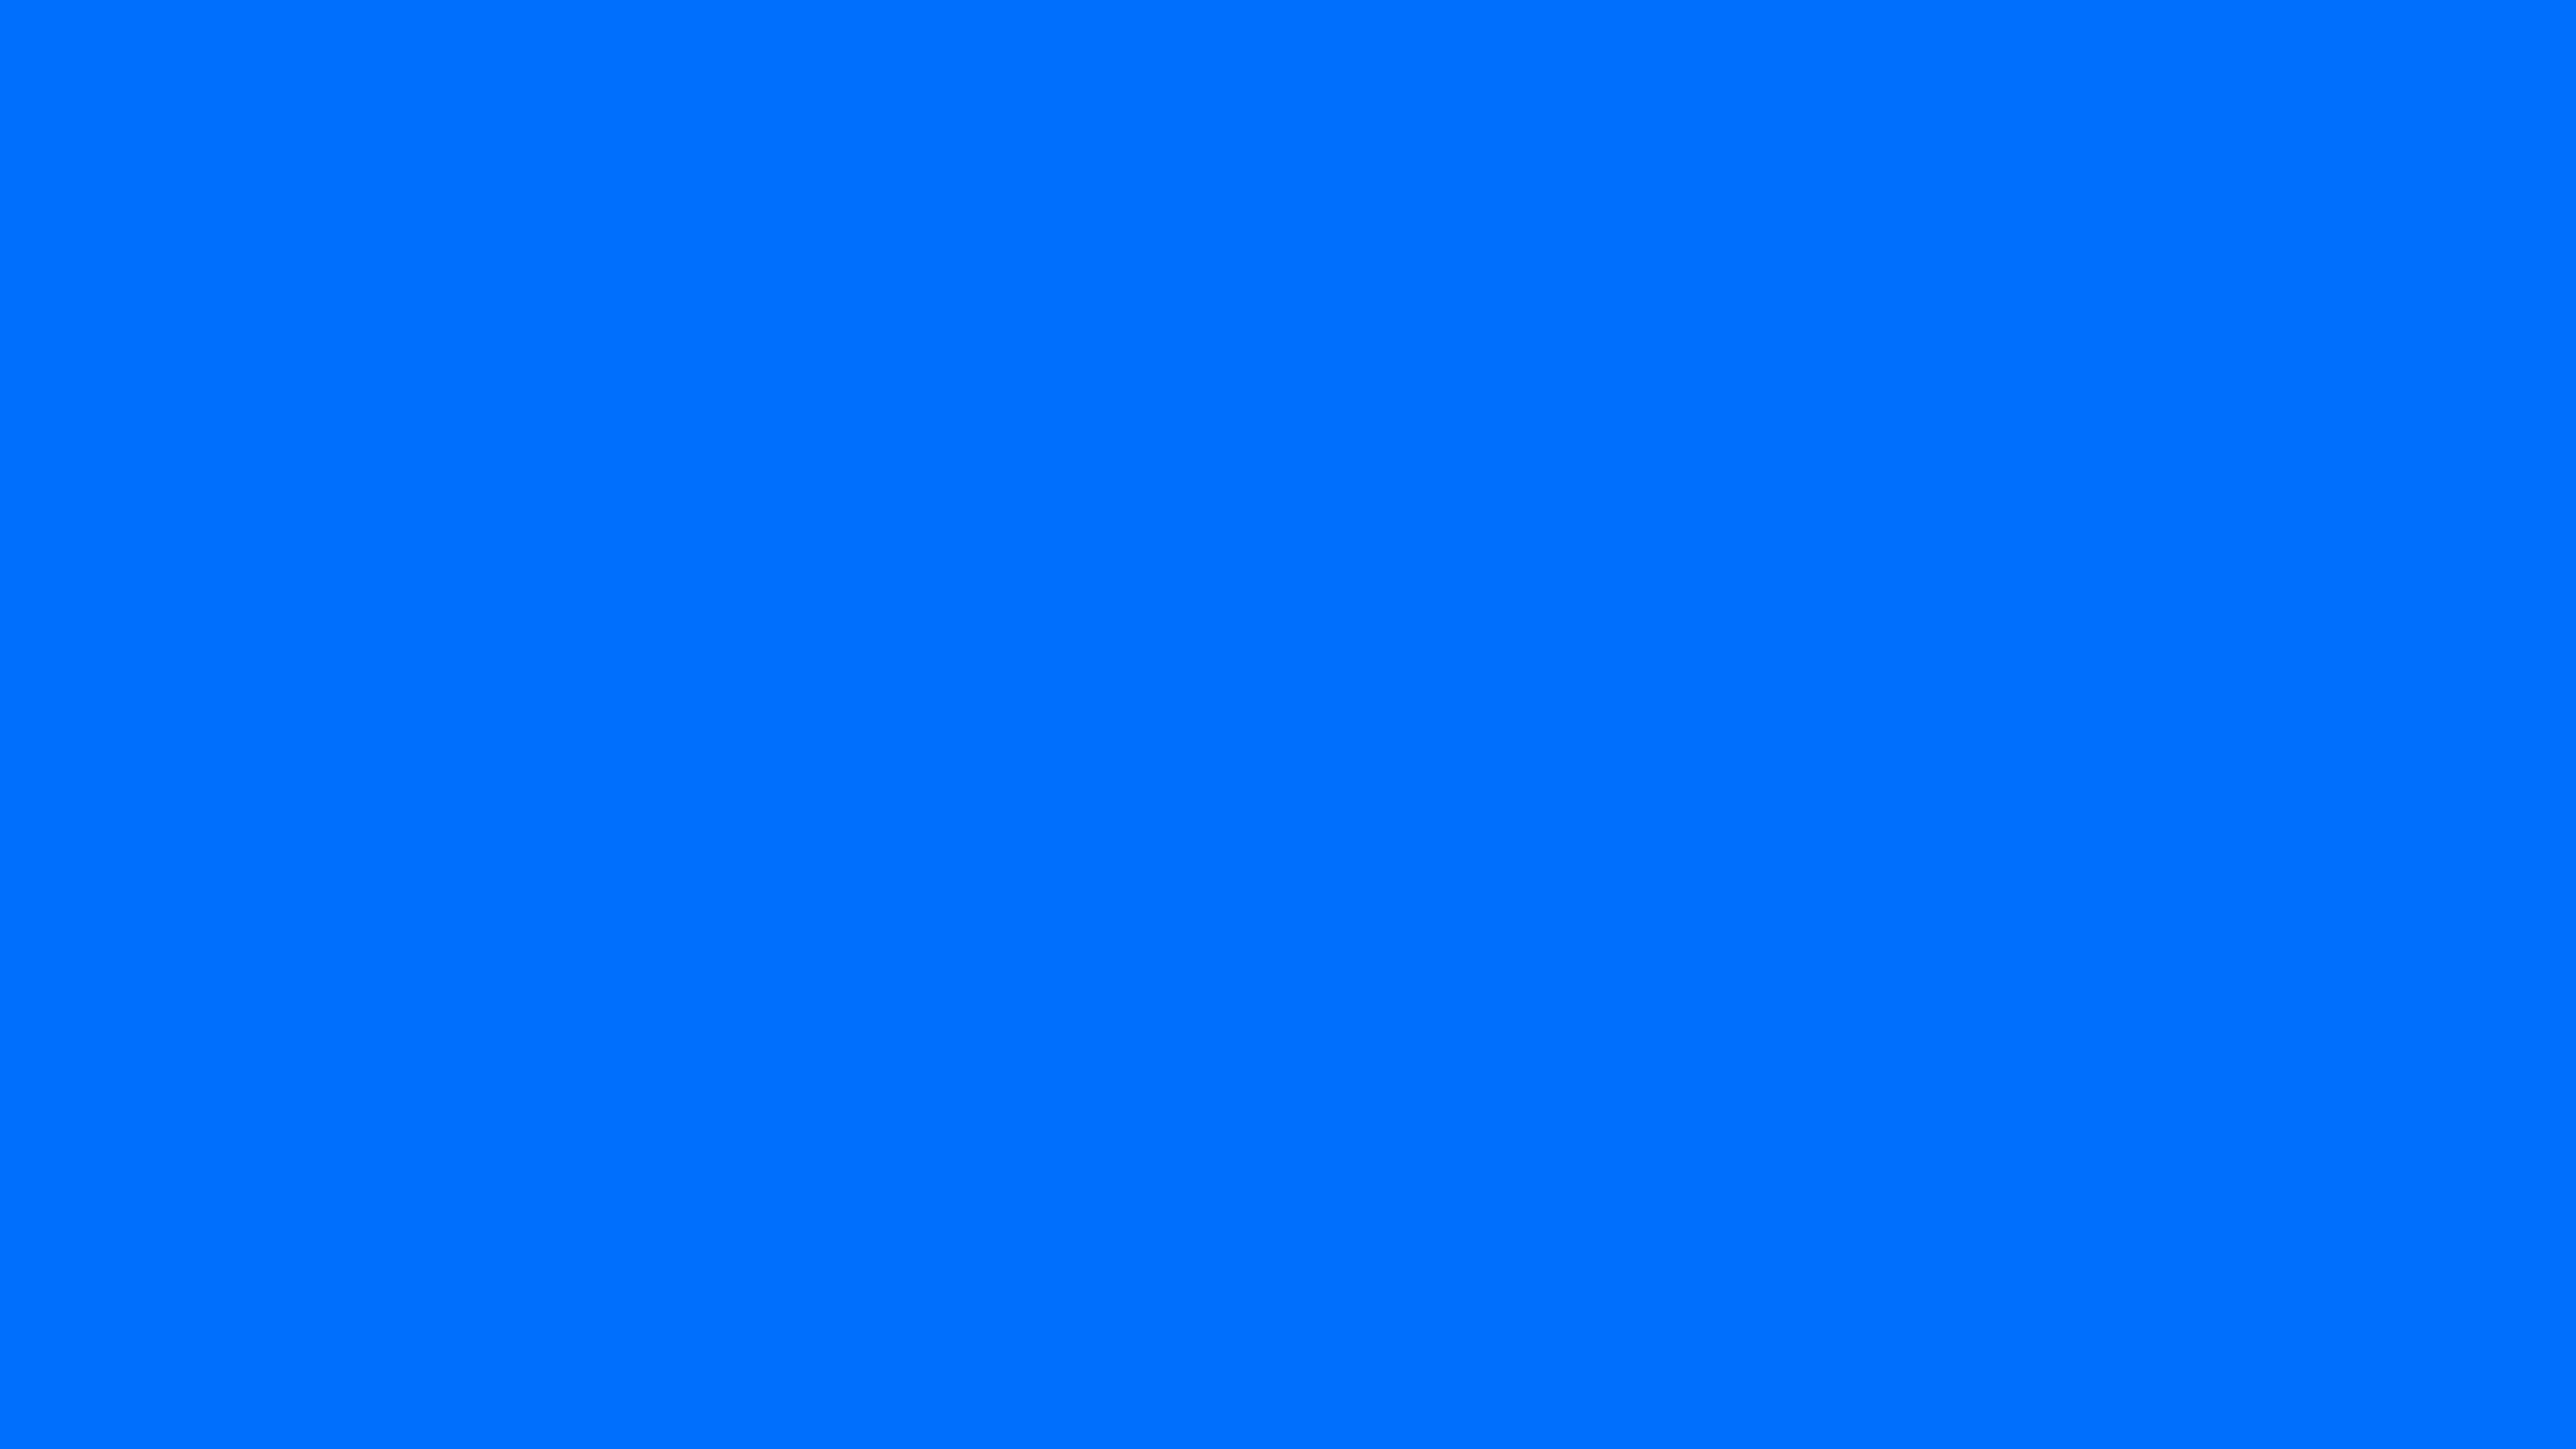 Технический цвет. Эггер u525. U525 st9 Делфт голубой. Egger u515 st9 французский голубой. Кроношпан цвет синий 0125 BS.